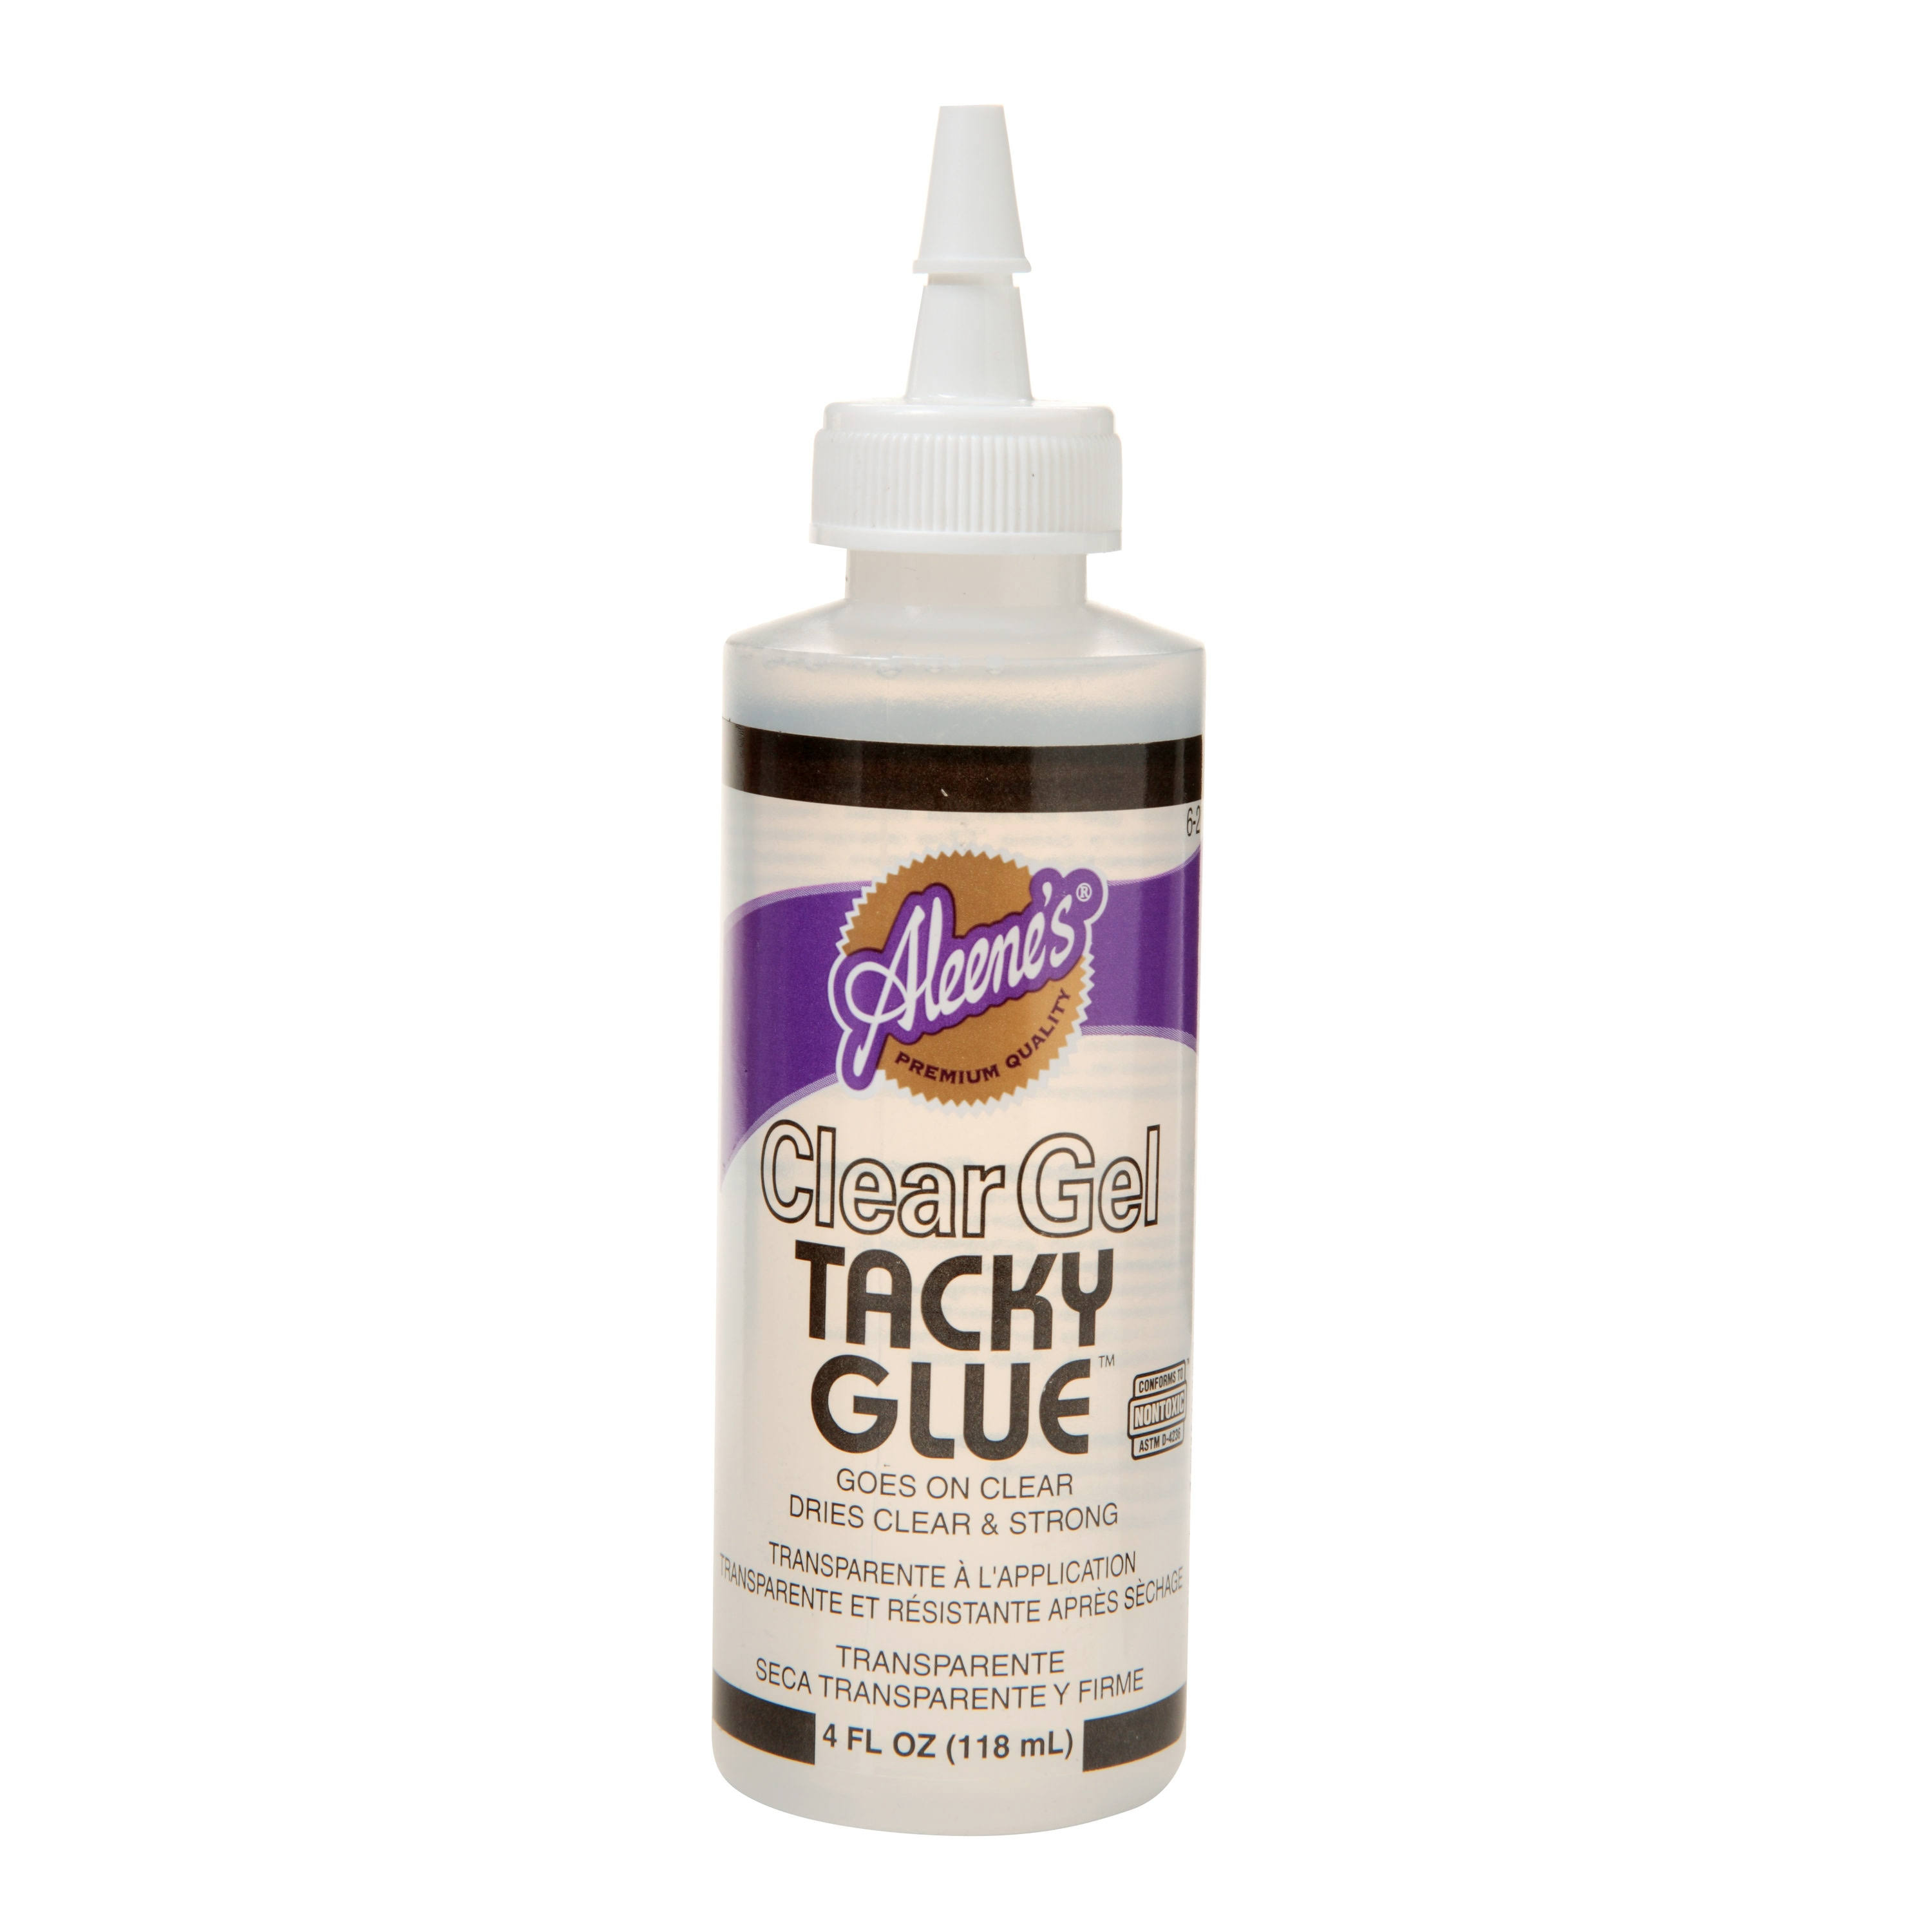 Aleene's Clear Gel Tacky Glue - 4oz